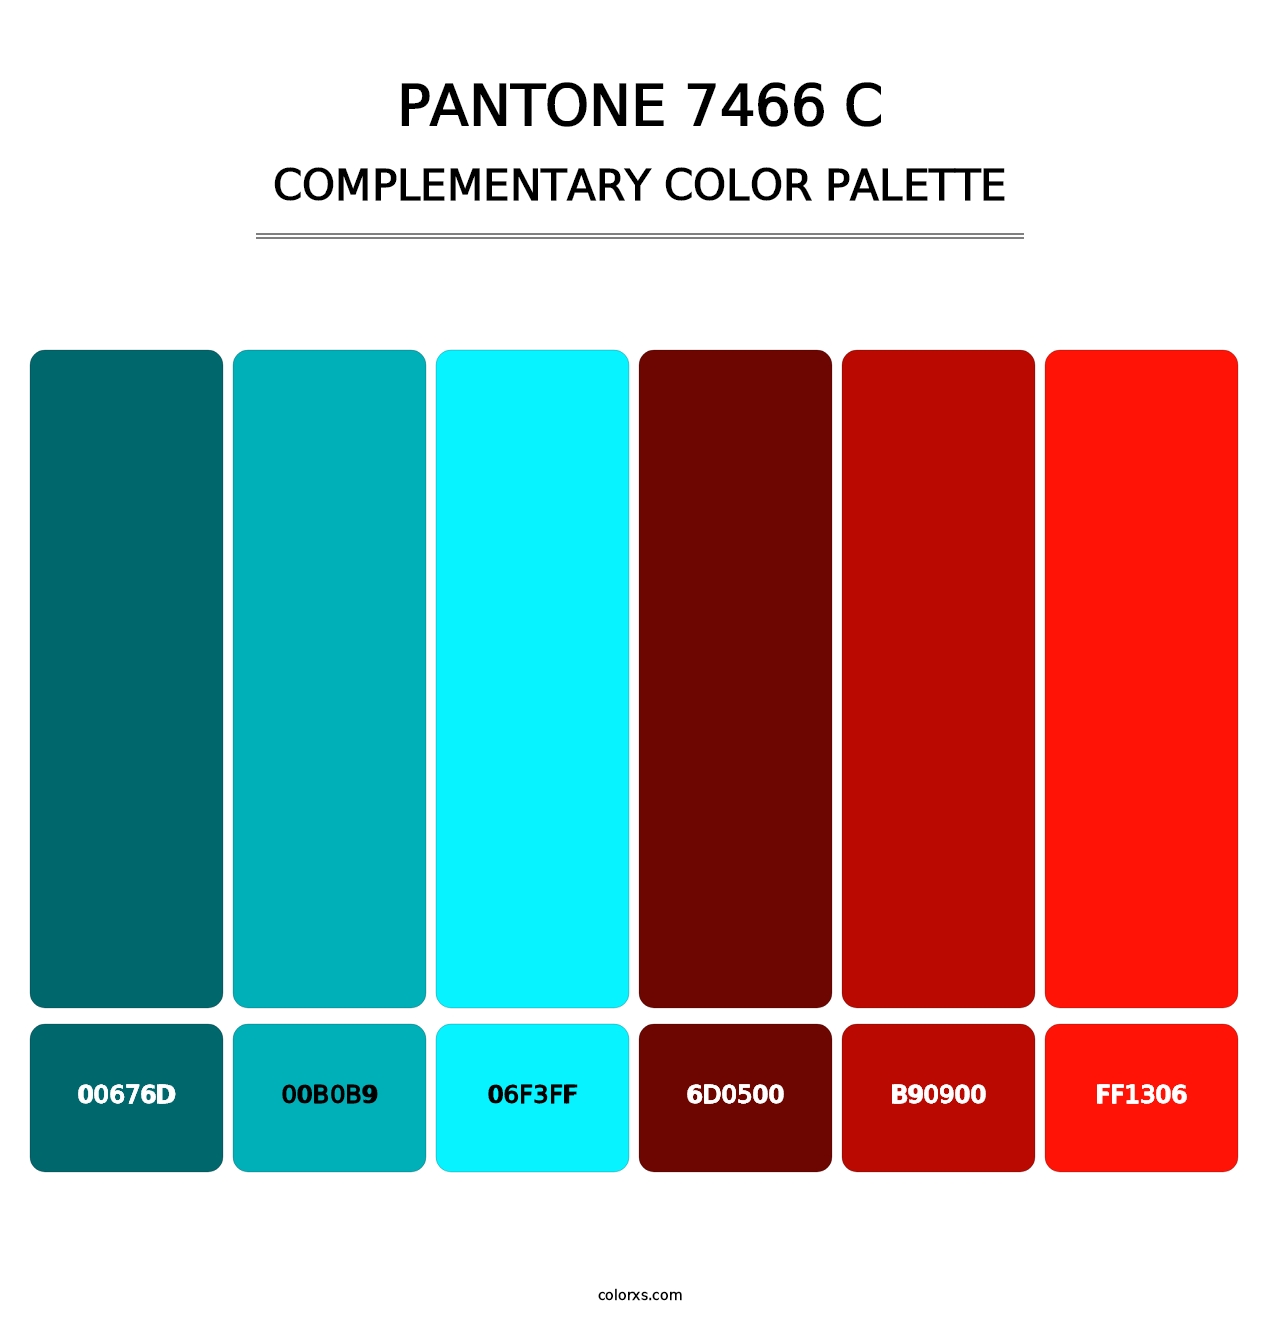 PANTONE 7466 C - Complementary Color Palette